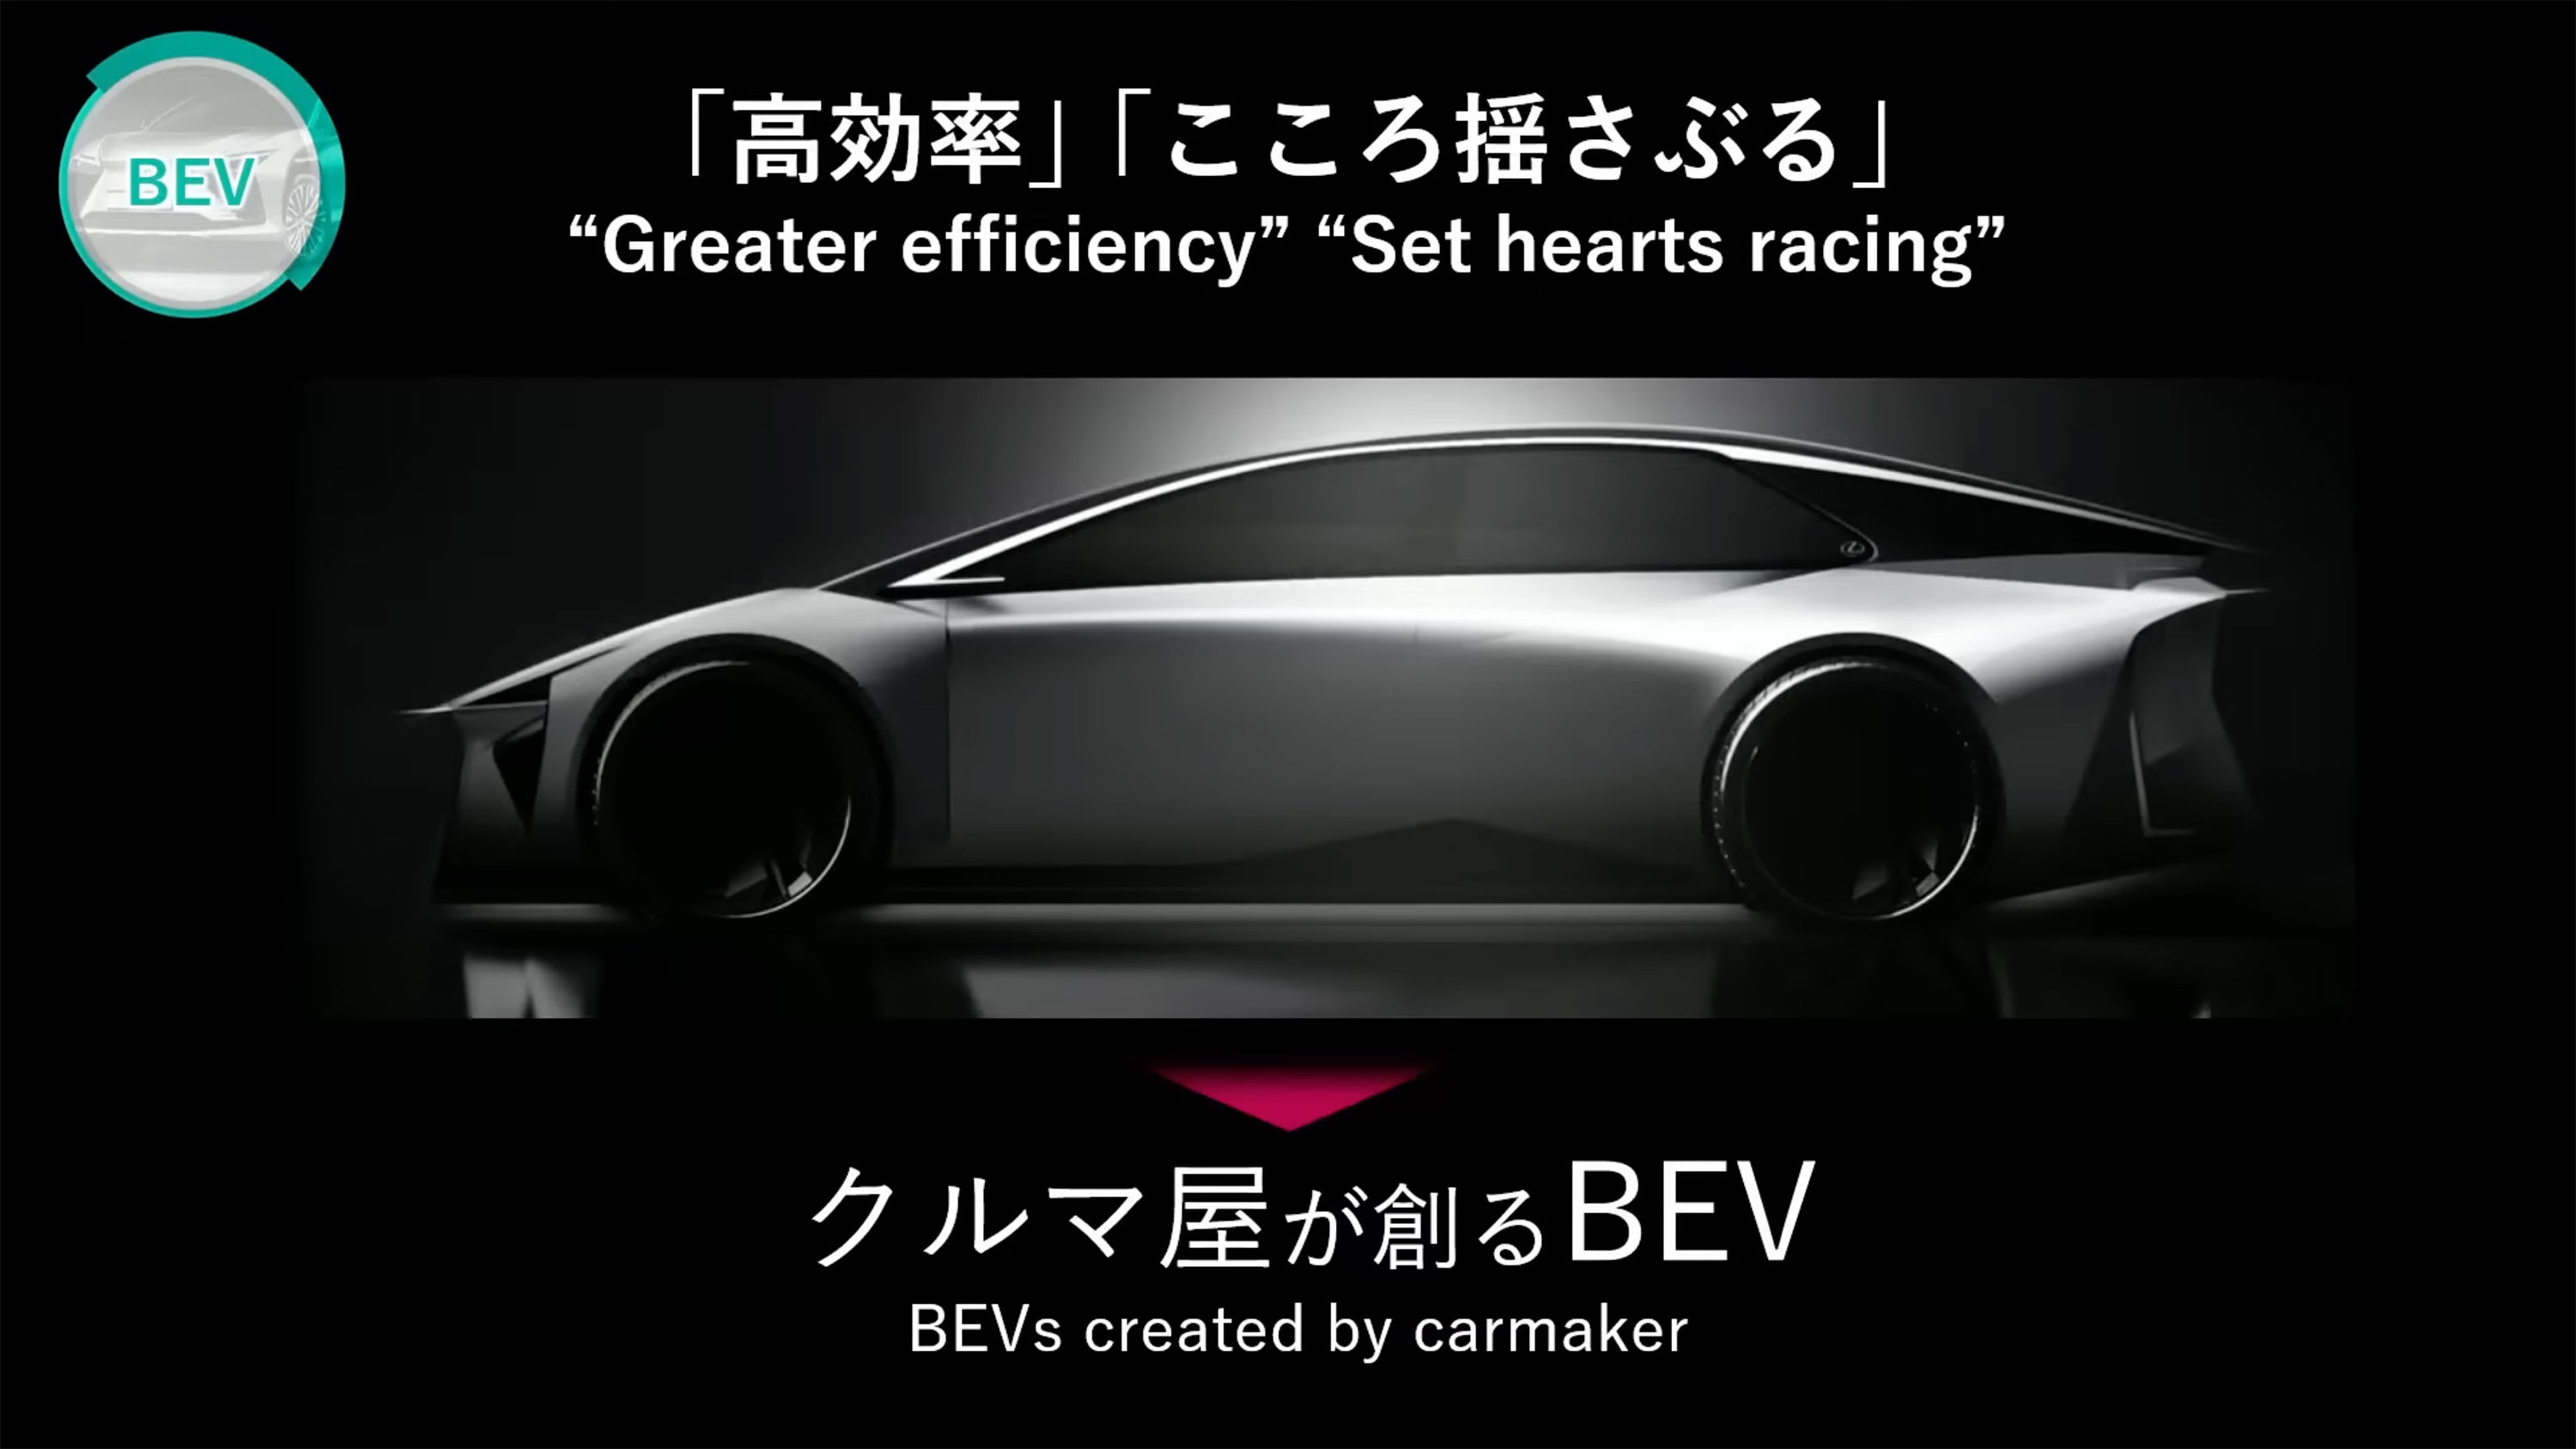 Lexus Concept Teaser